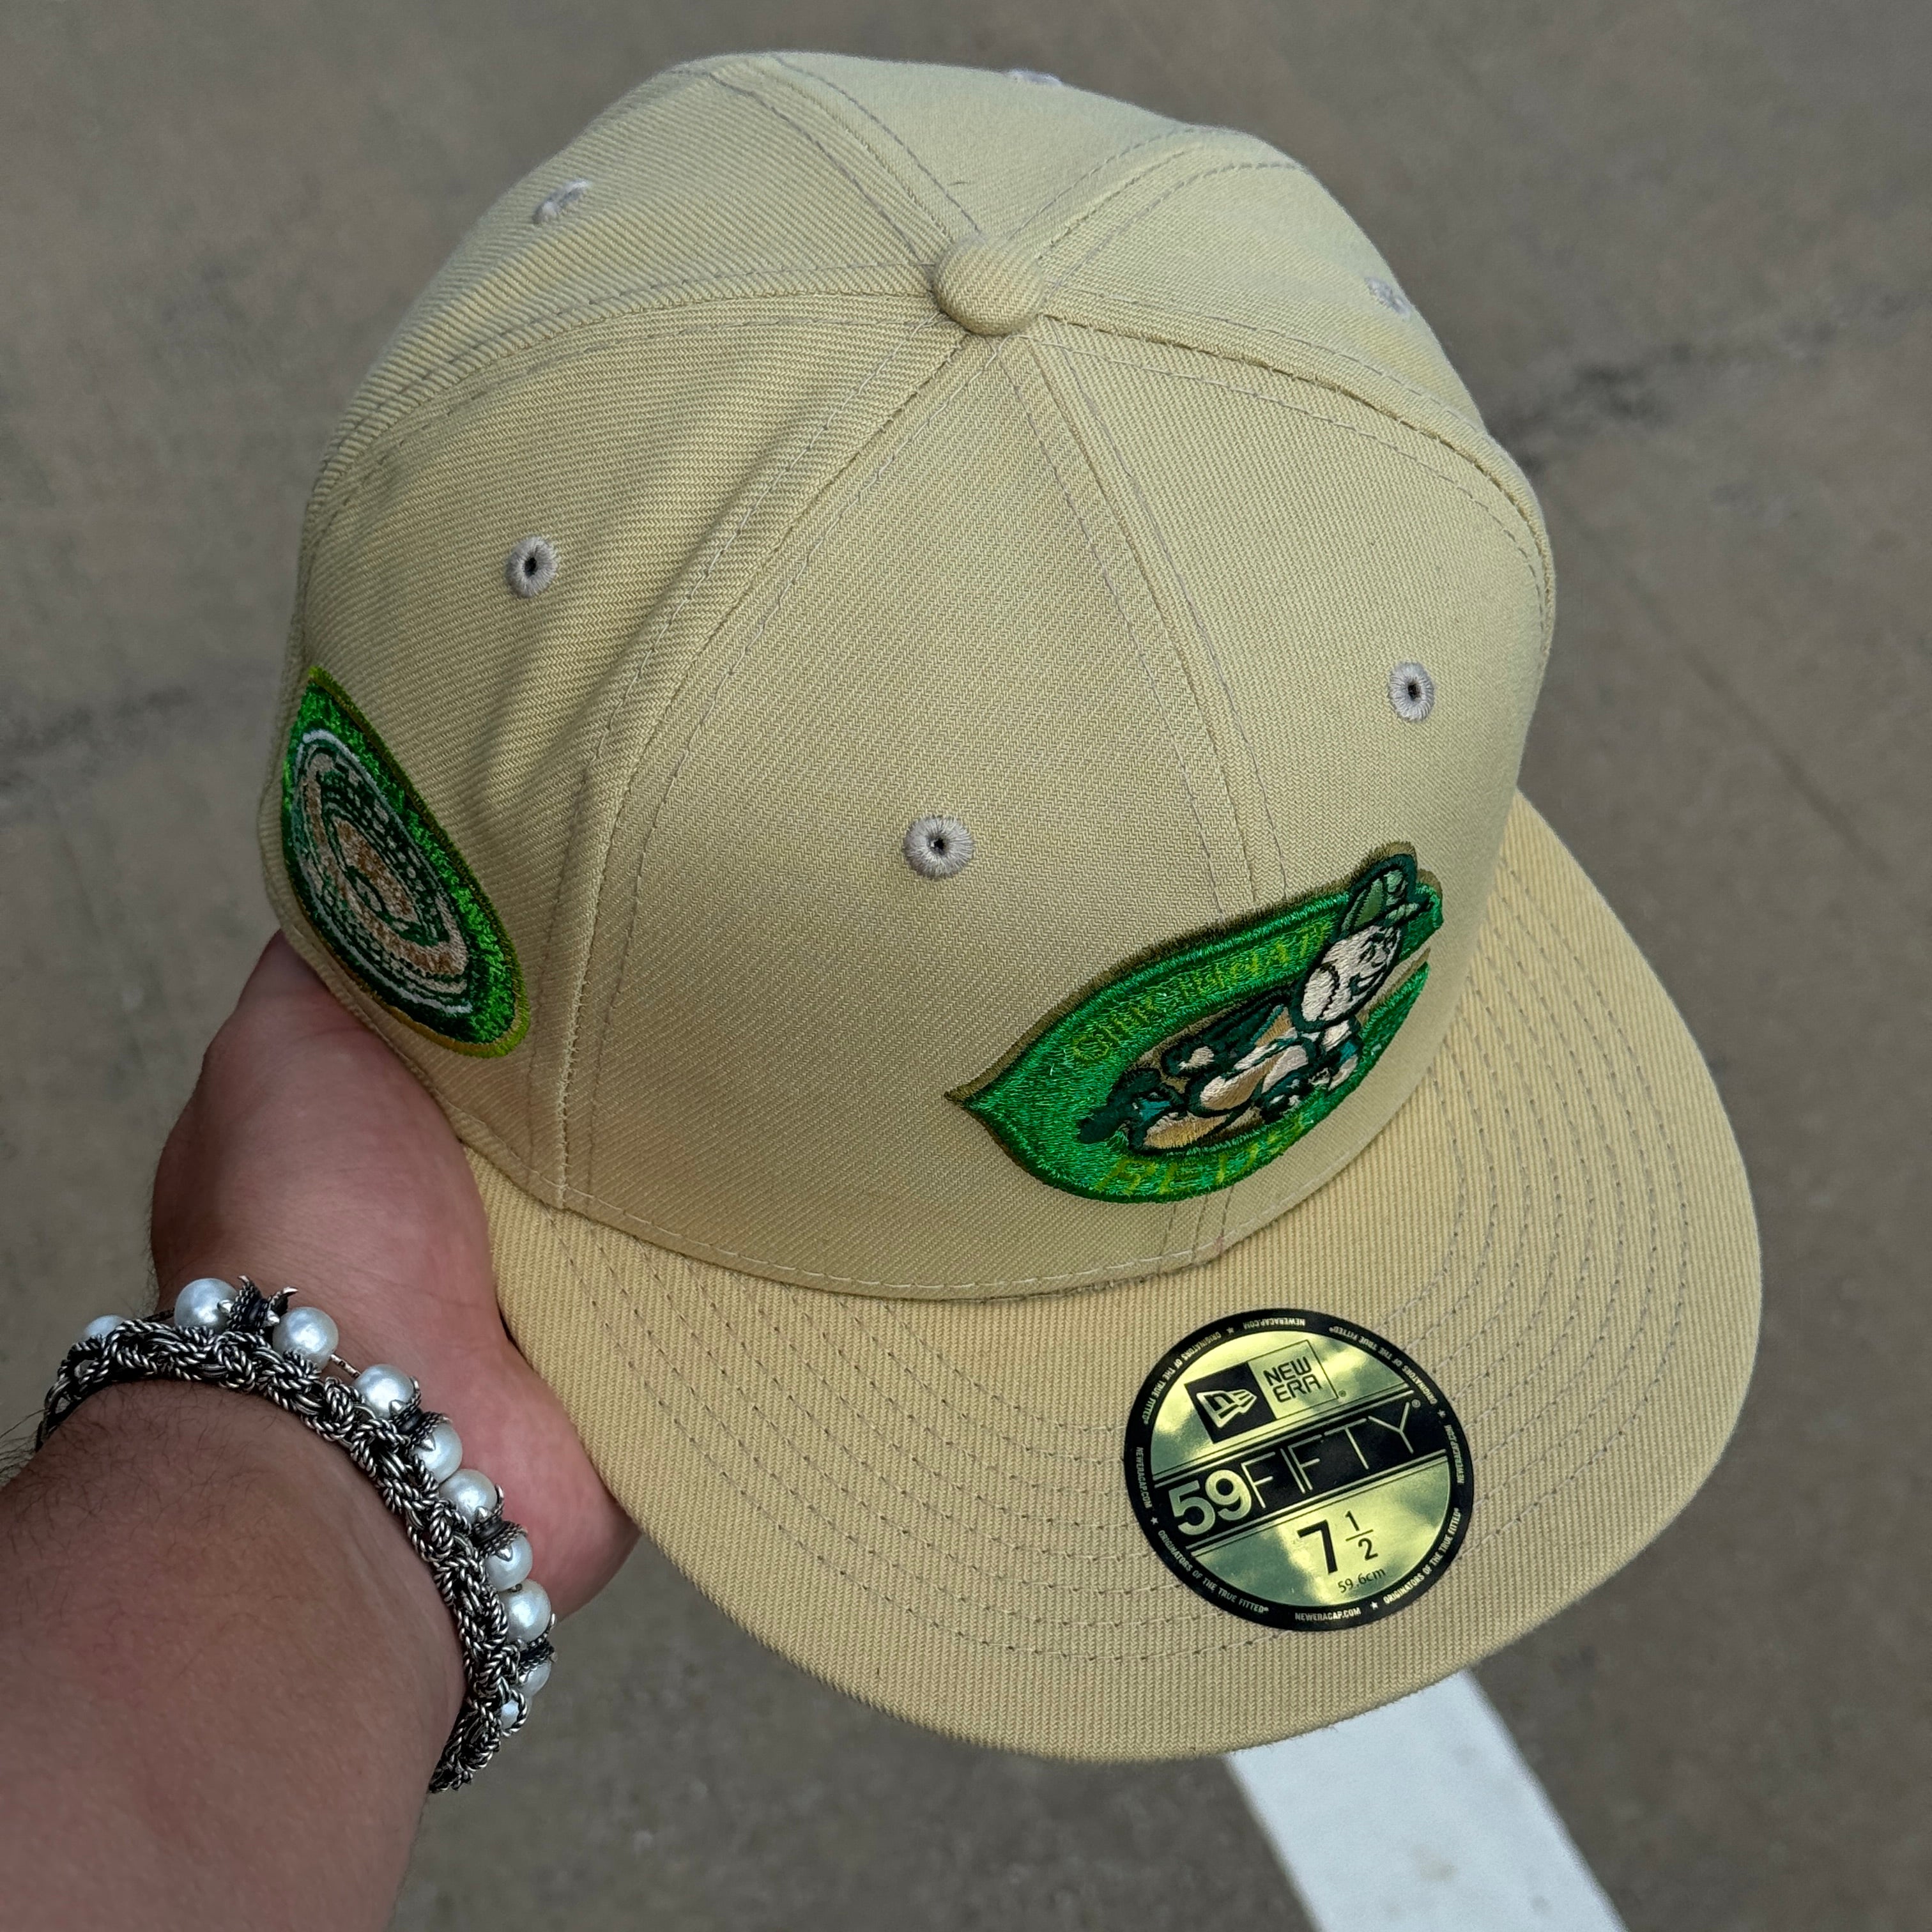 NEW 1/2 Gold Cincinnati Twins 100th Anniversary 59fifty New Era Fitted Hat Cap